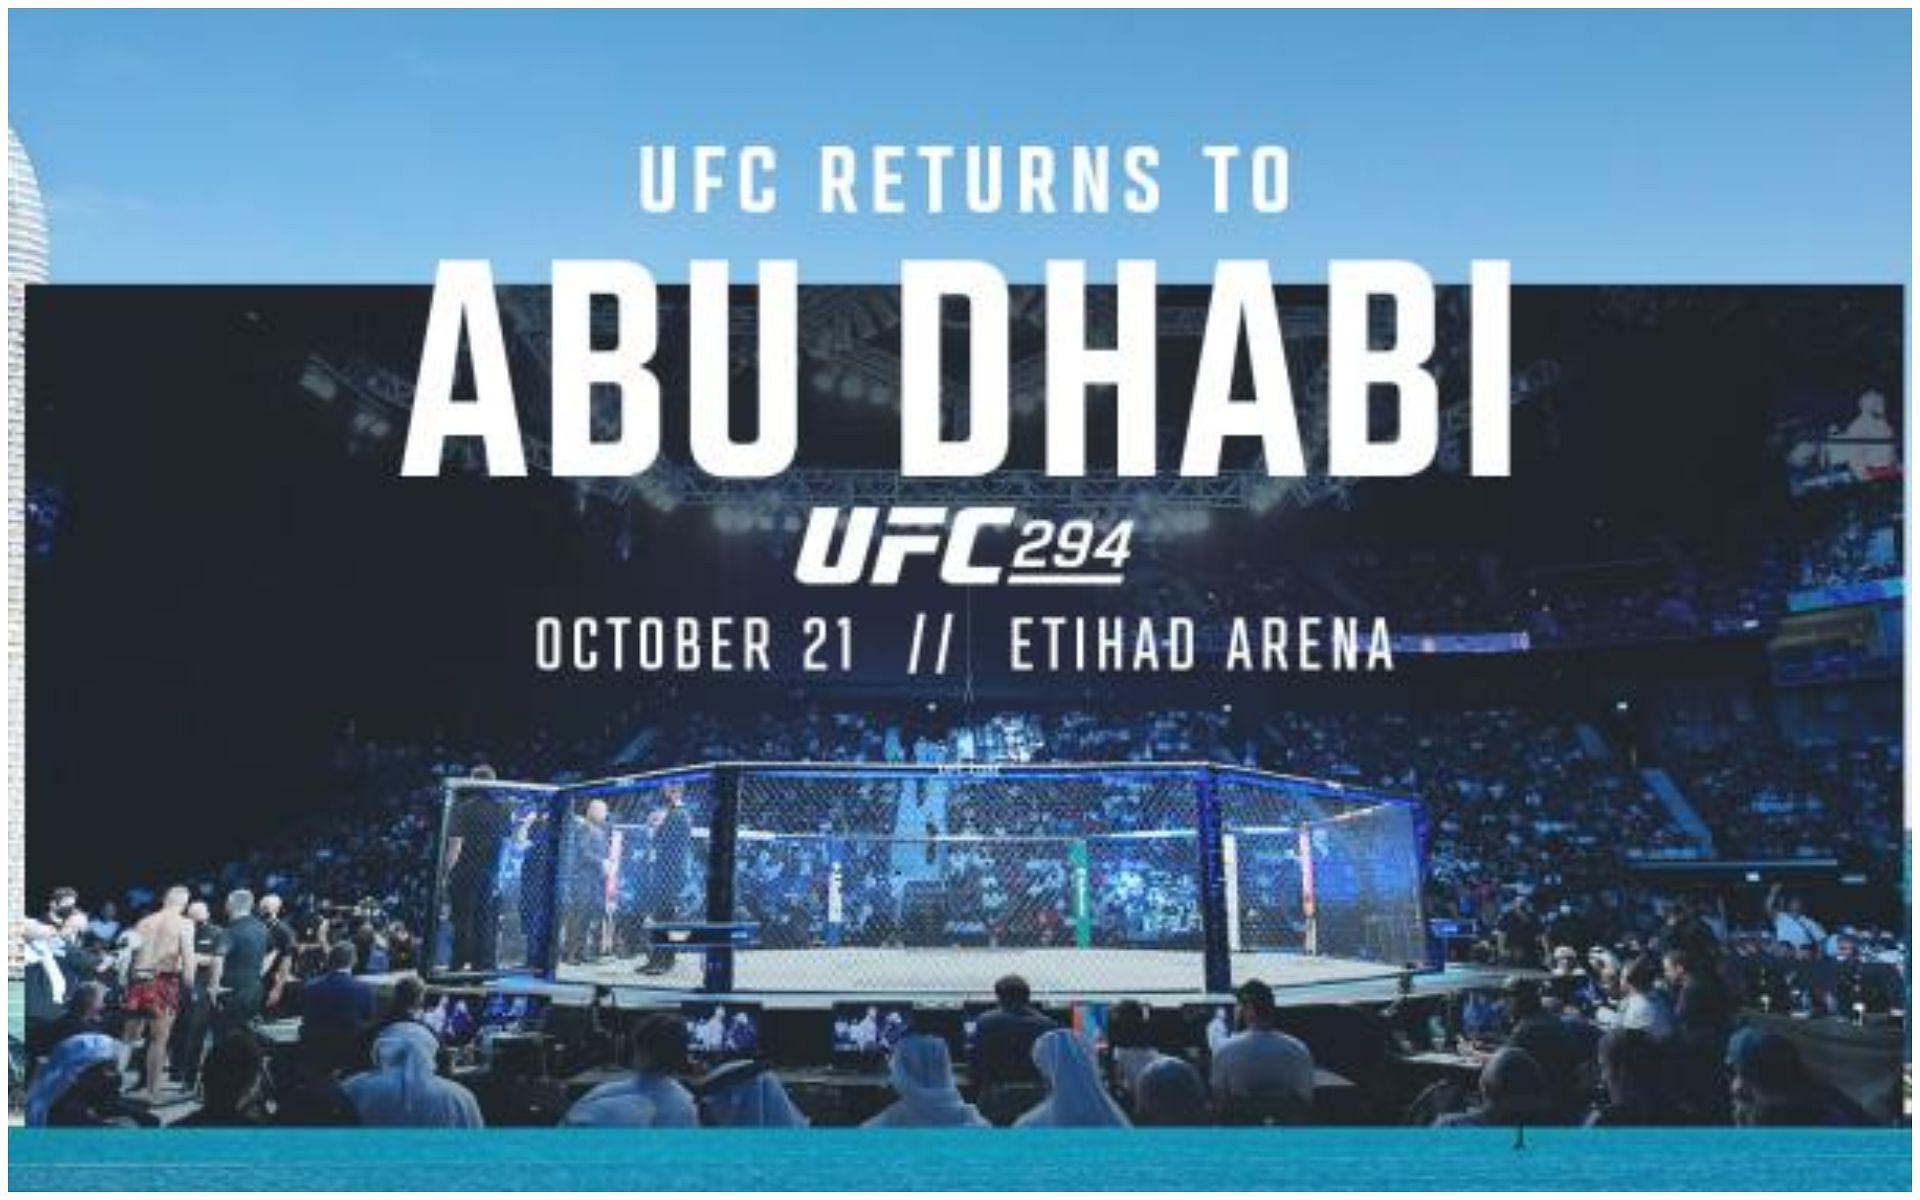 UFC returns to Abu Dhabi for UFC 294 